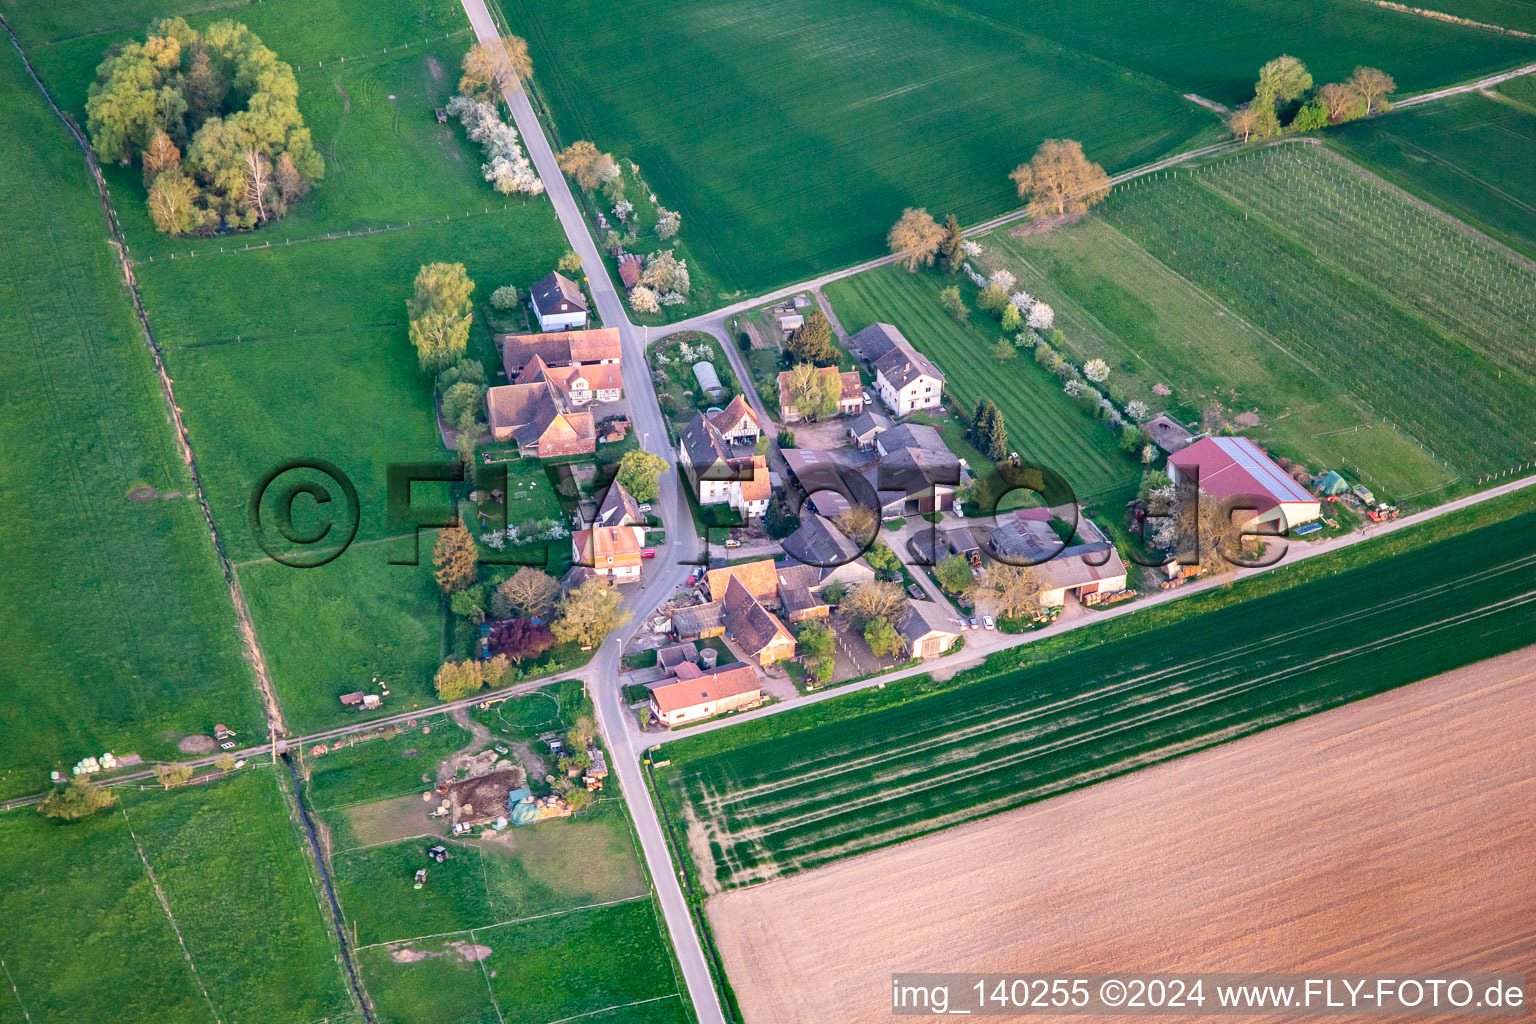 Mennonite community in Germany in Deutschhof in the district Deutschhof in Kapellen-Drusweiler in the state Rhineland-Palatinate, Germany